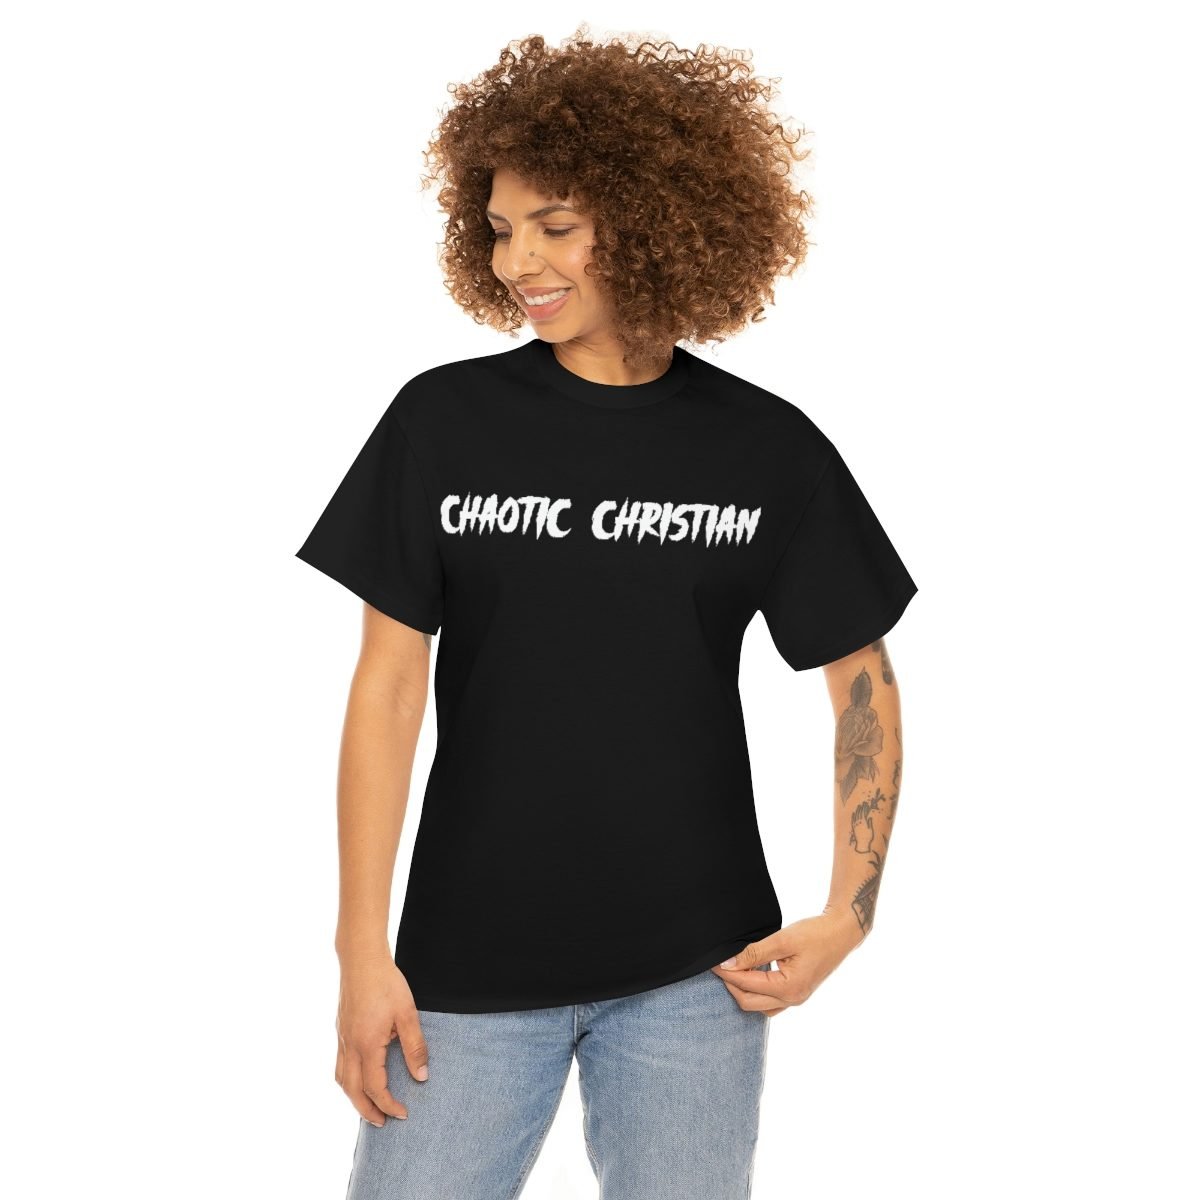 The Chaotic Christian Logo Short Sleeve Tshirt